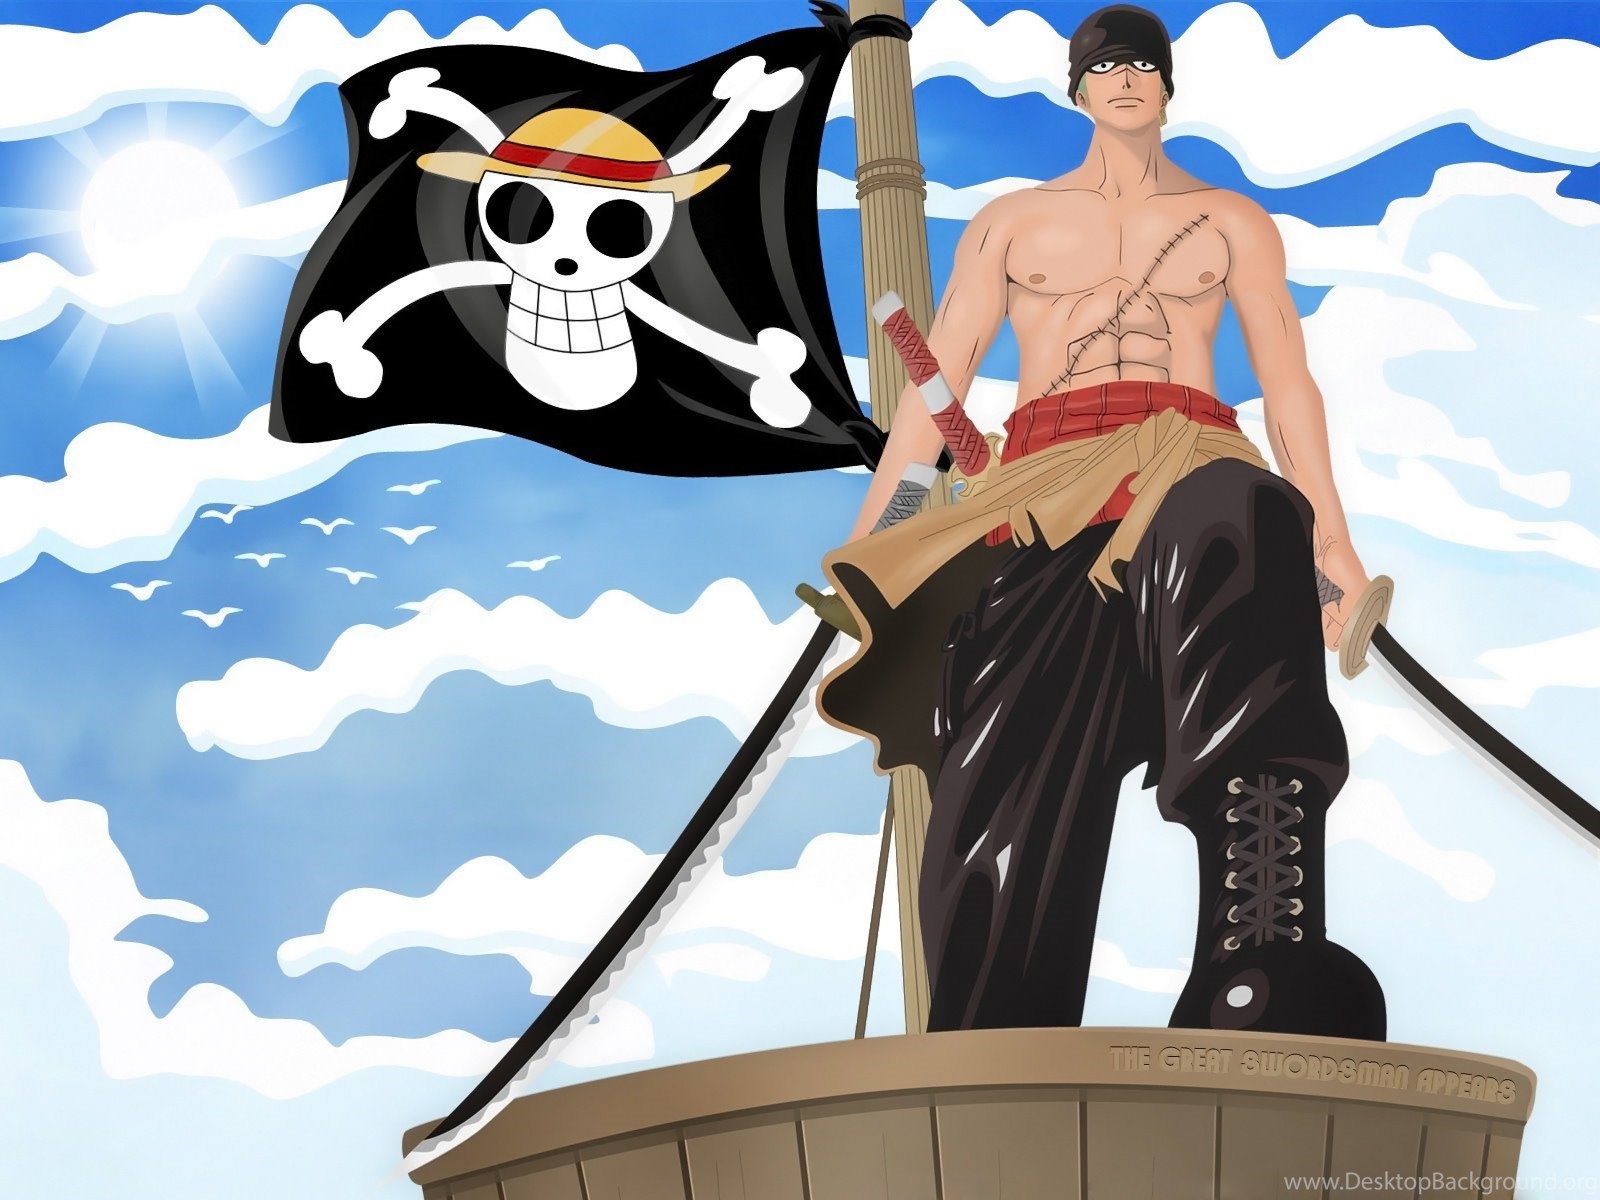 Download One Piece Pirate Flag Wallpapers Fullscreen Standart 4:3 1600x1200...